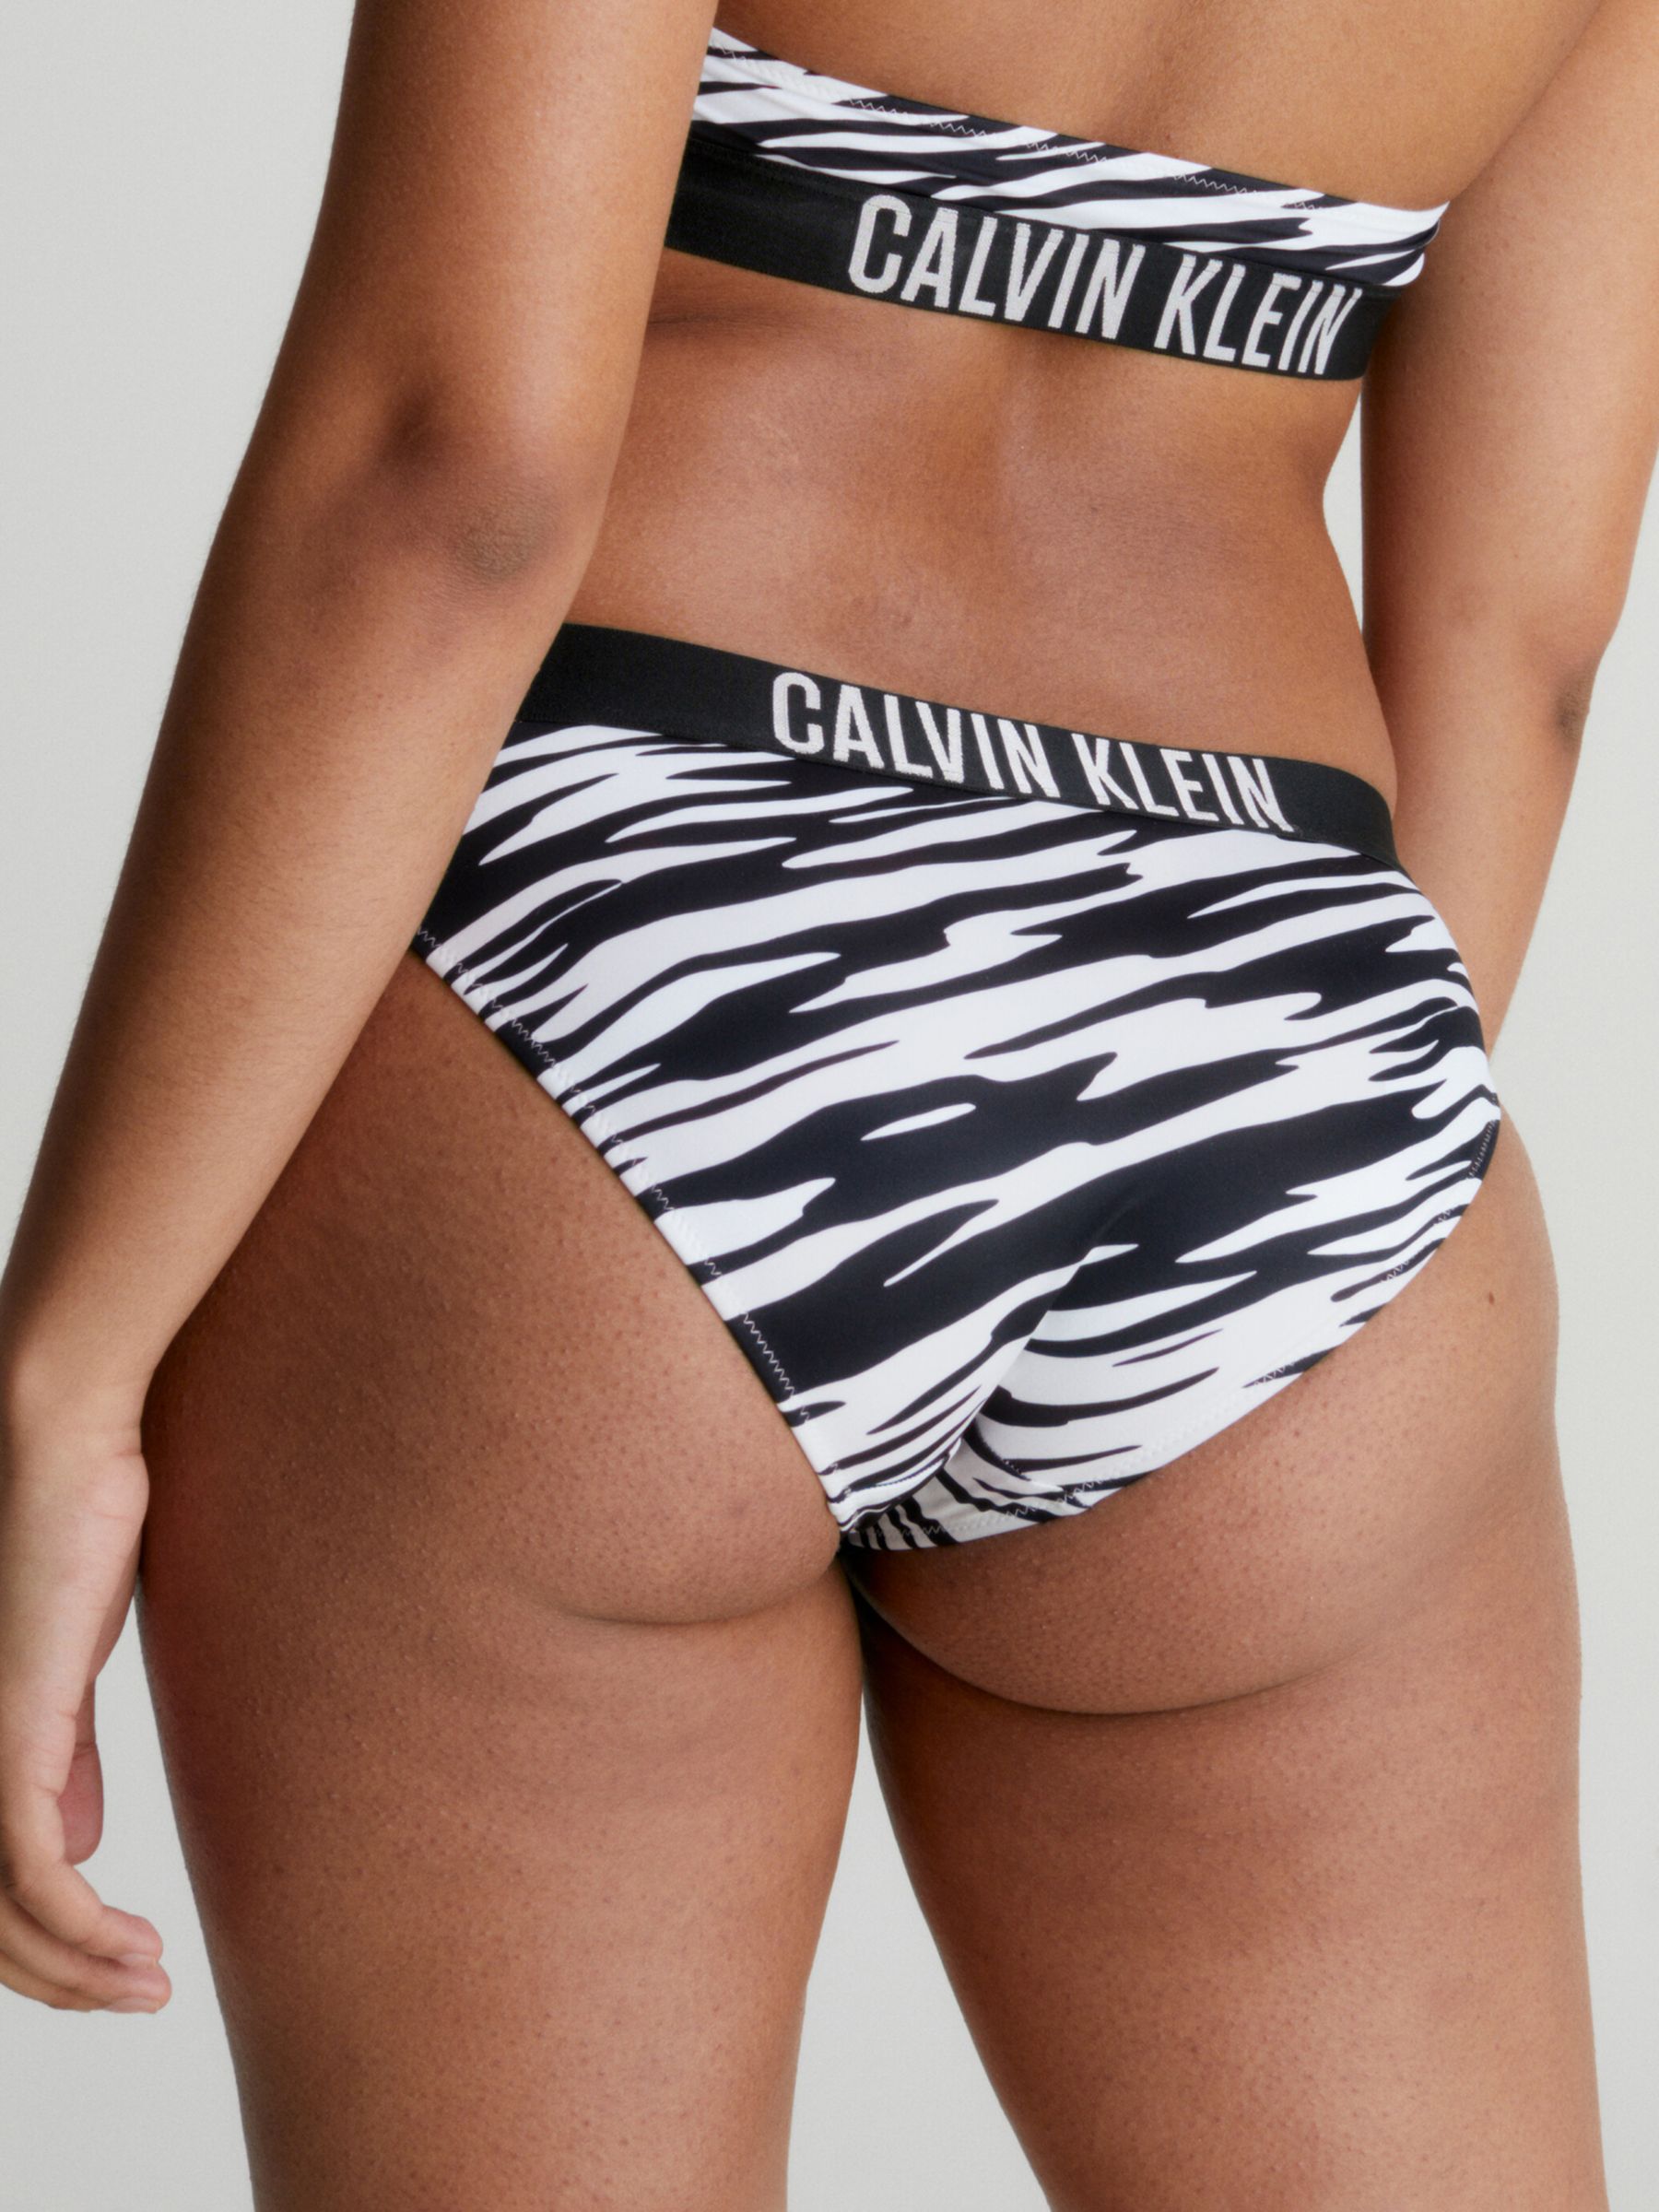 Calvin Klein Intense Power Zebra Bikini Bottoms, Black/White, S